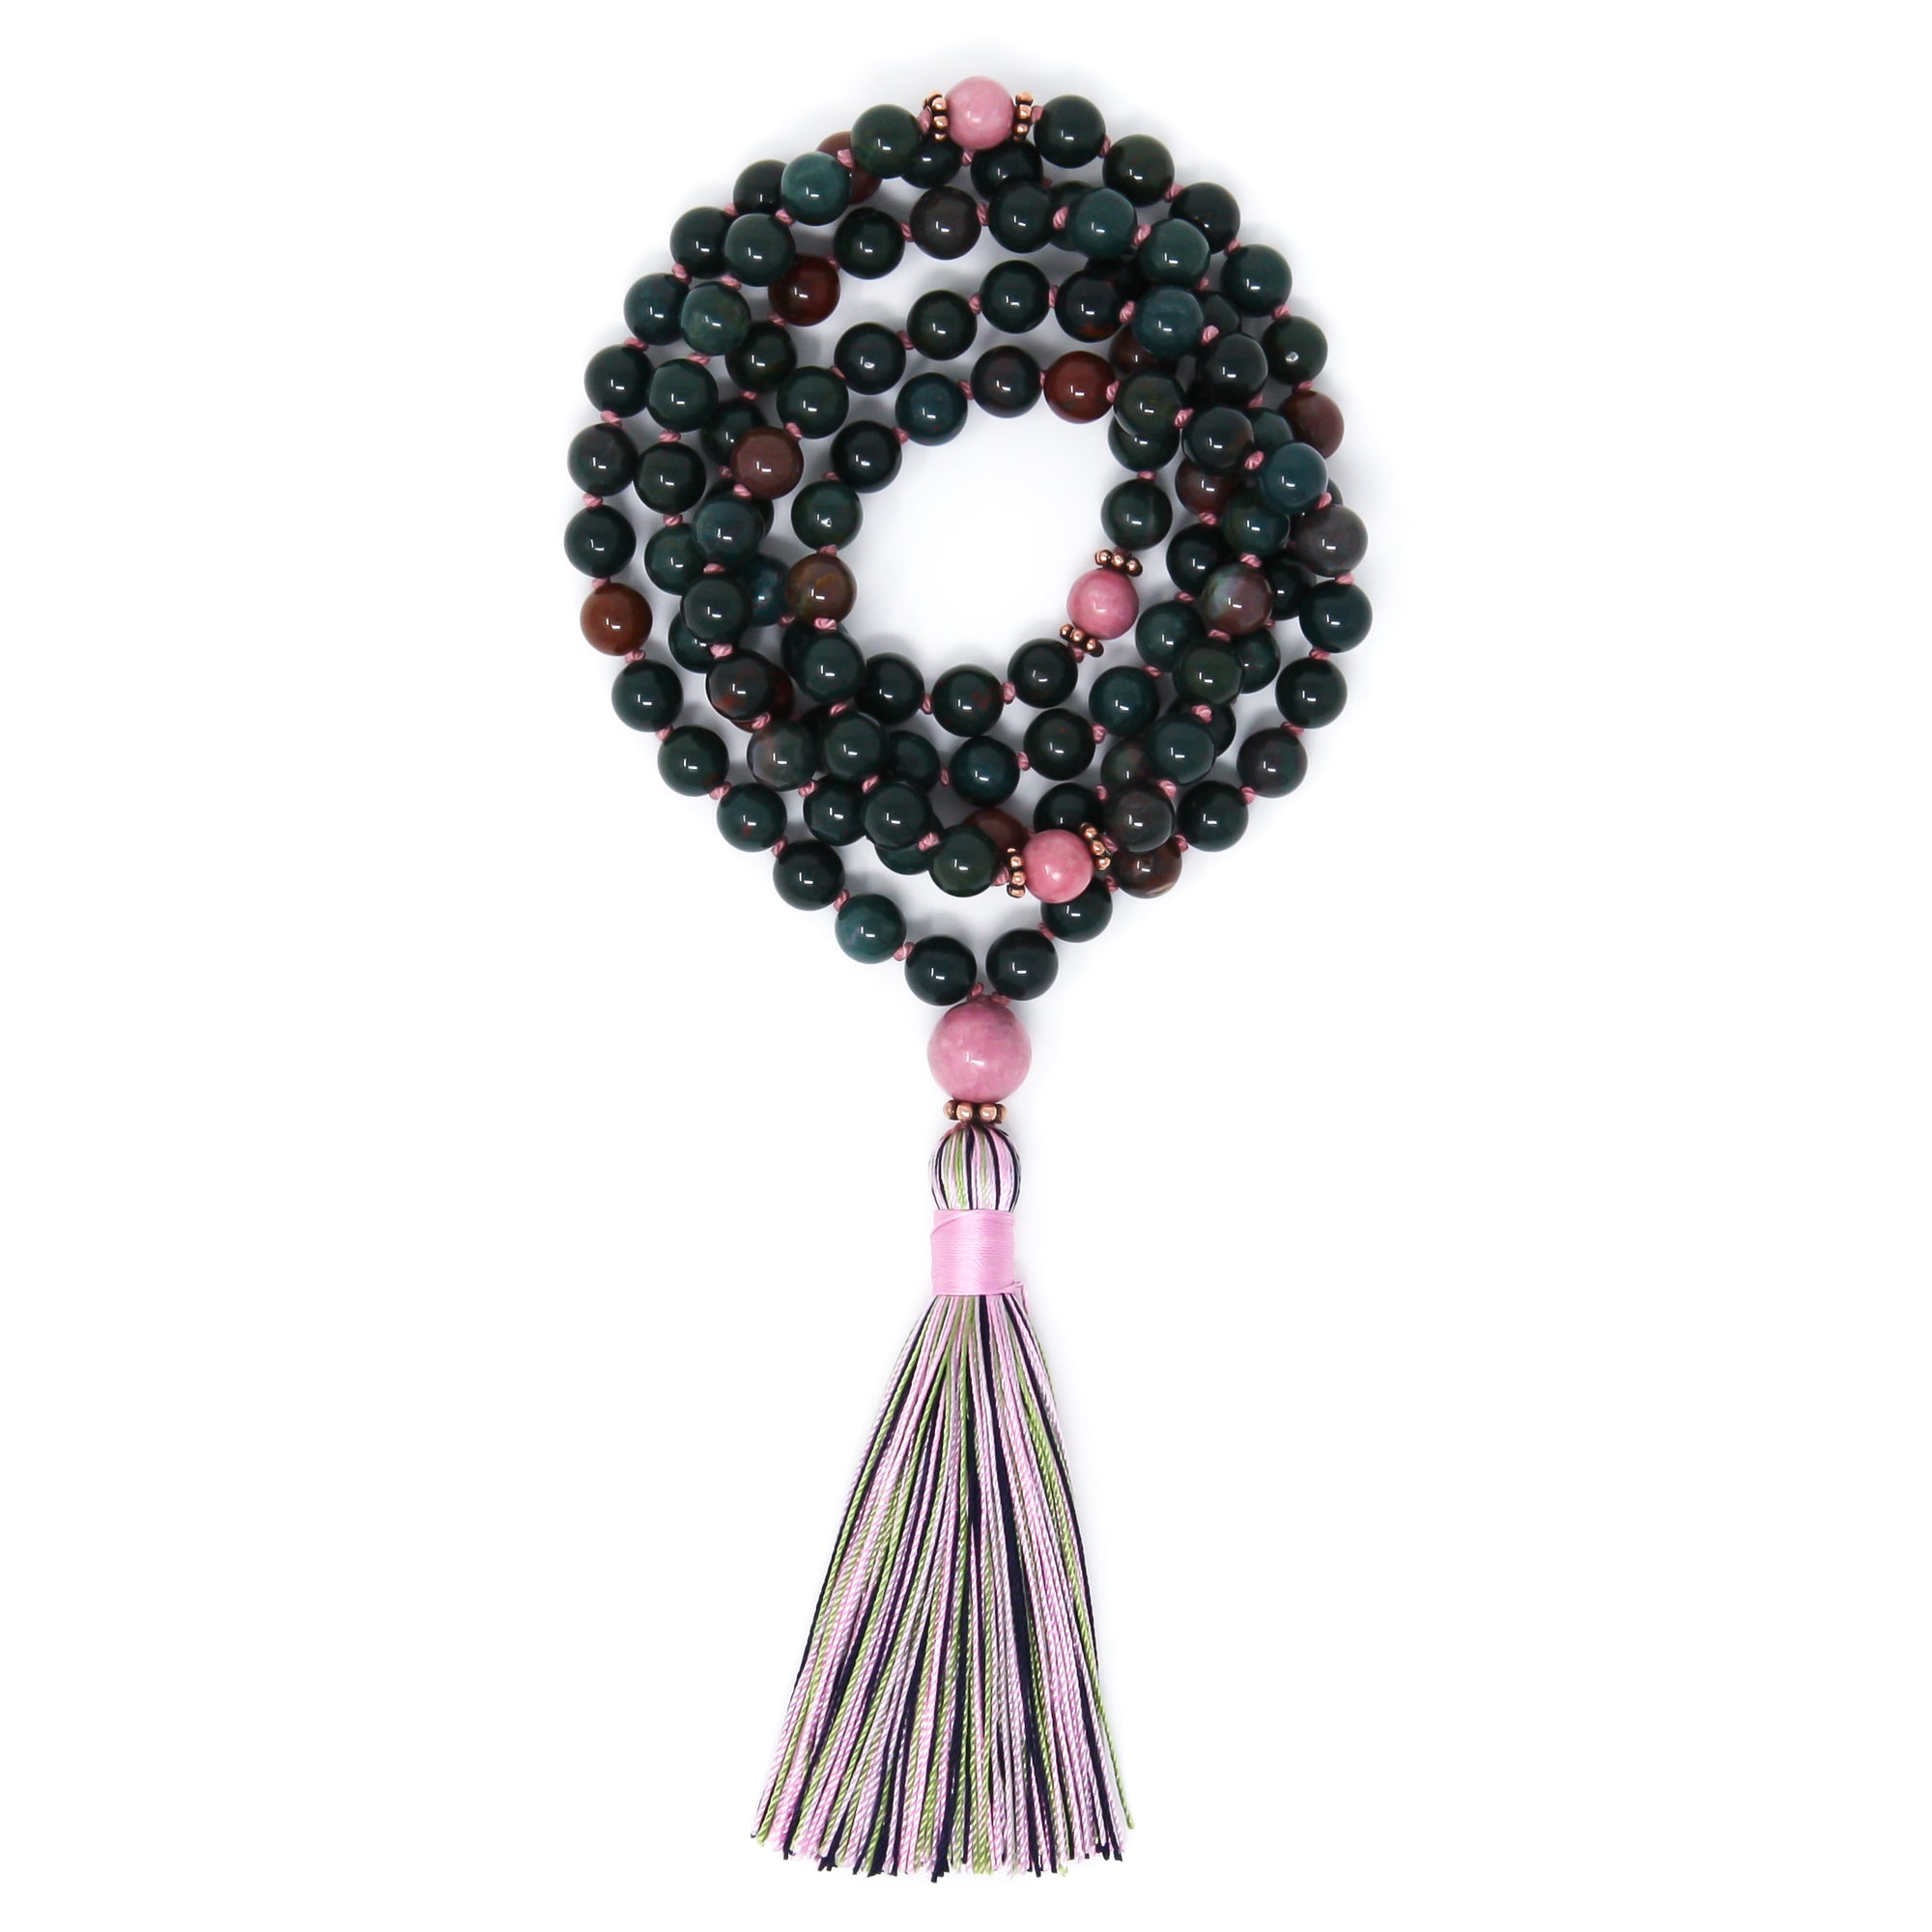 Bloodstone prayer beads with rhodonite, crystal healing jewelry